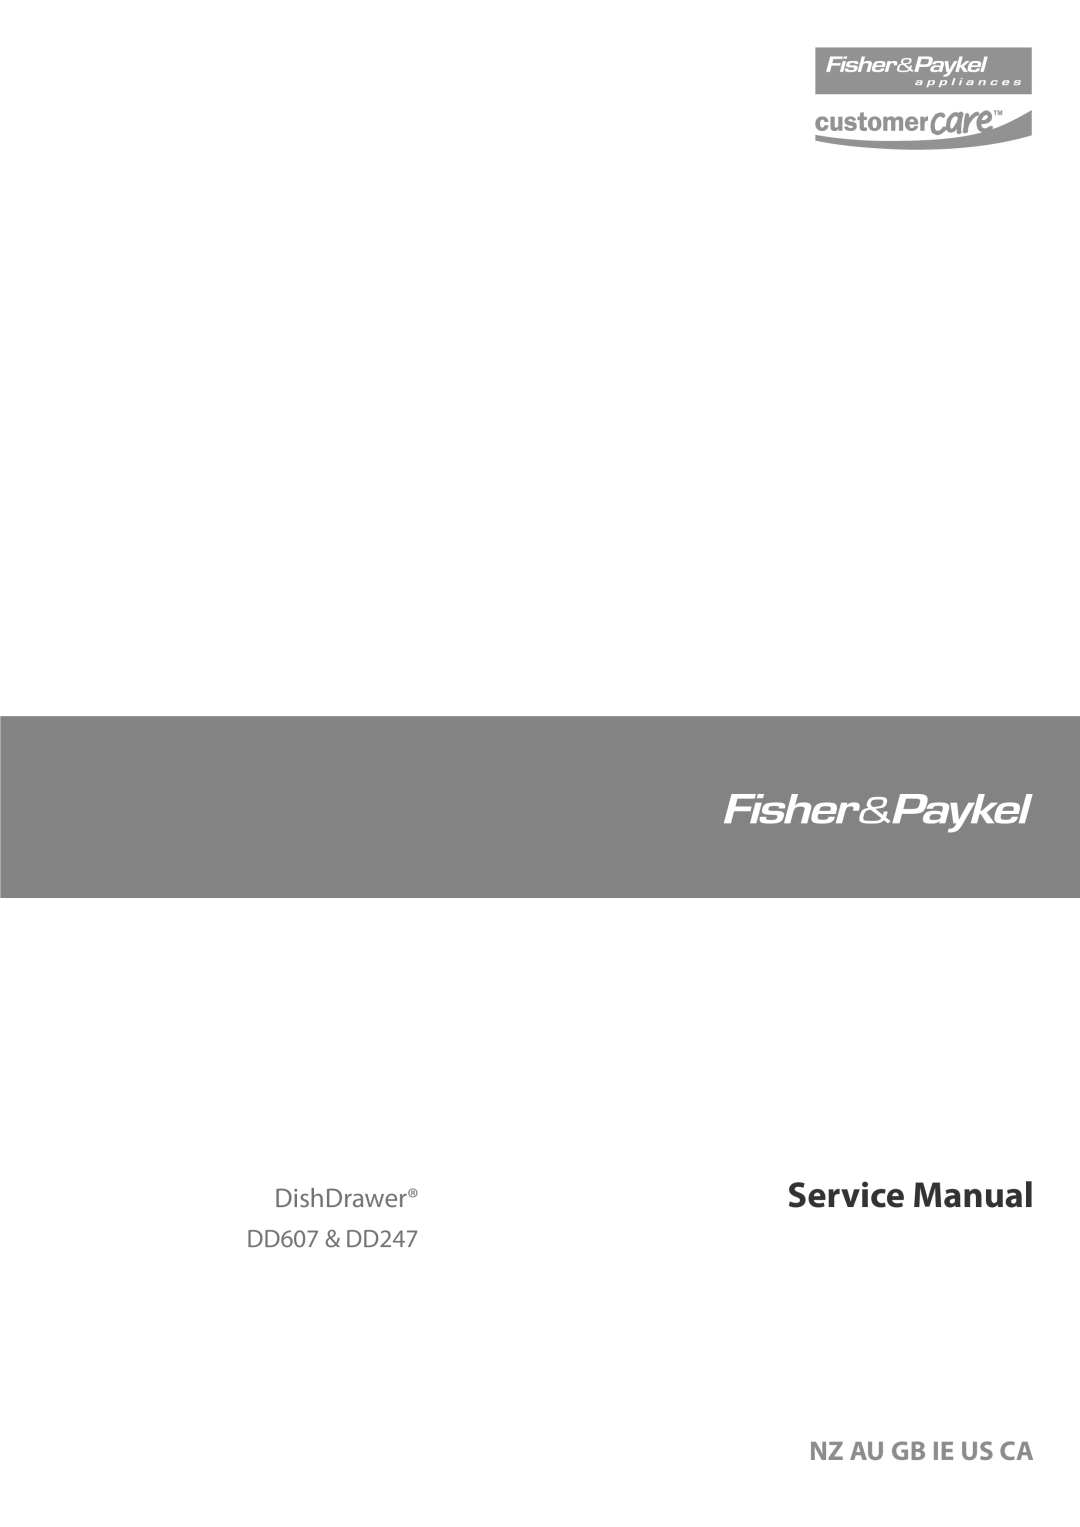 Fisher & Paykel service manual Service Manual, DishDrawer, Nz Au Gb Ie Us Ca, DD607 & DD247 